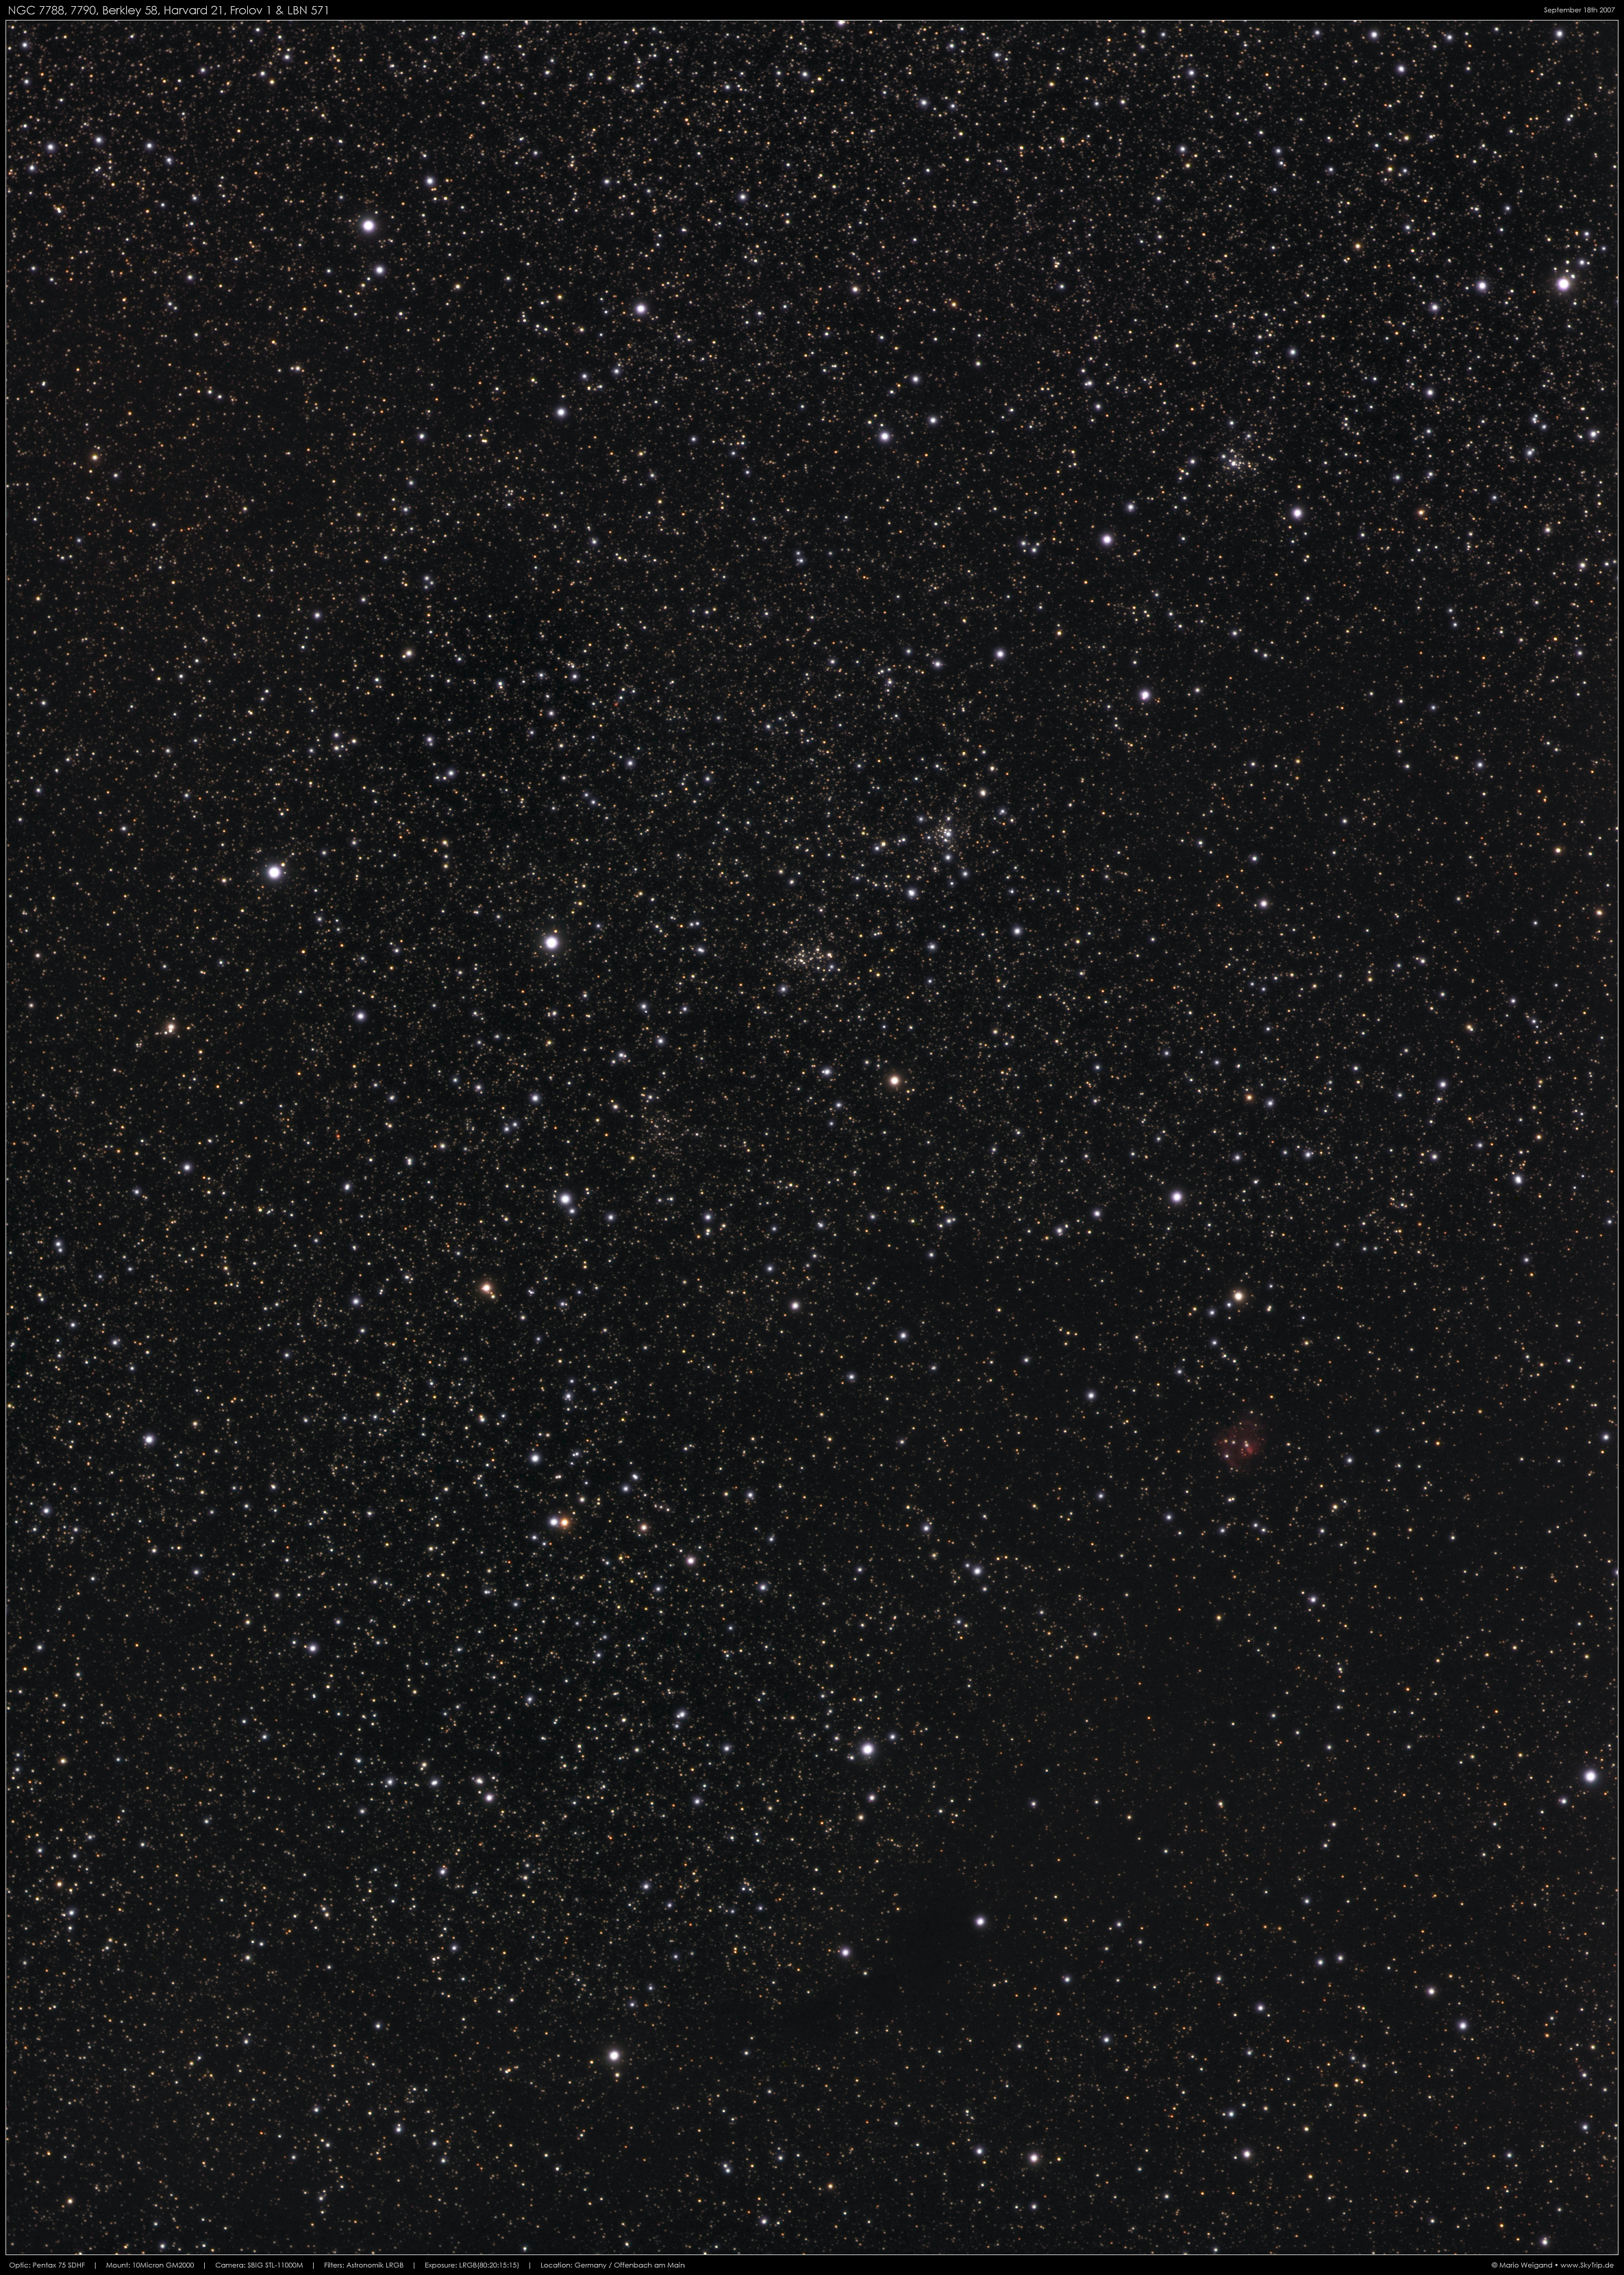 NGC 7790 & 7788 mit Berkeley 58, Harvard 21, Frolov 1 und LBN 571 (Sh 2-168)